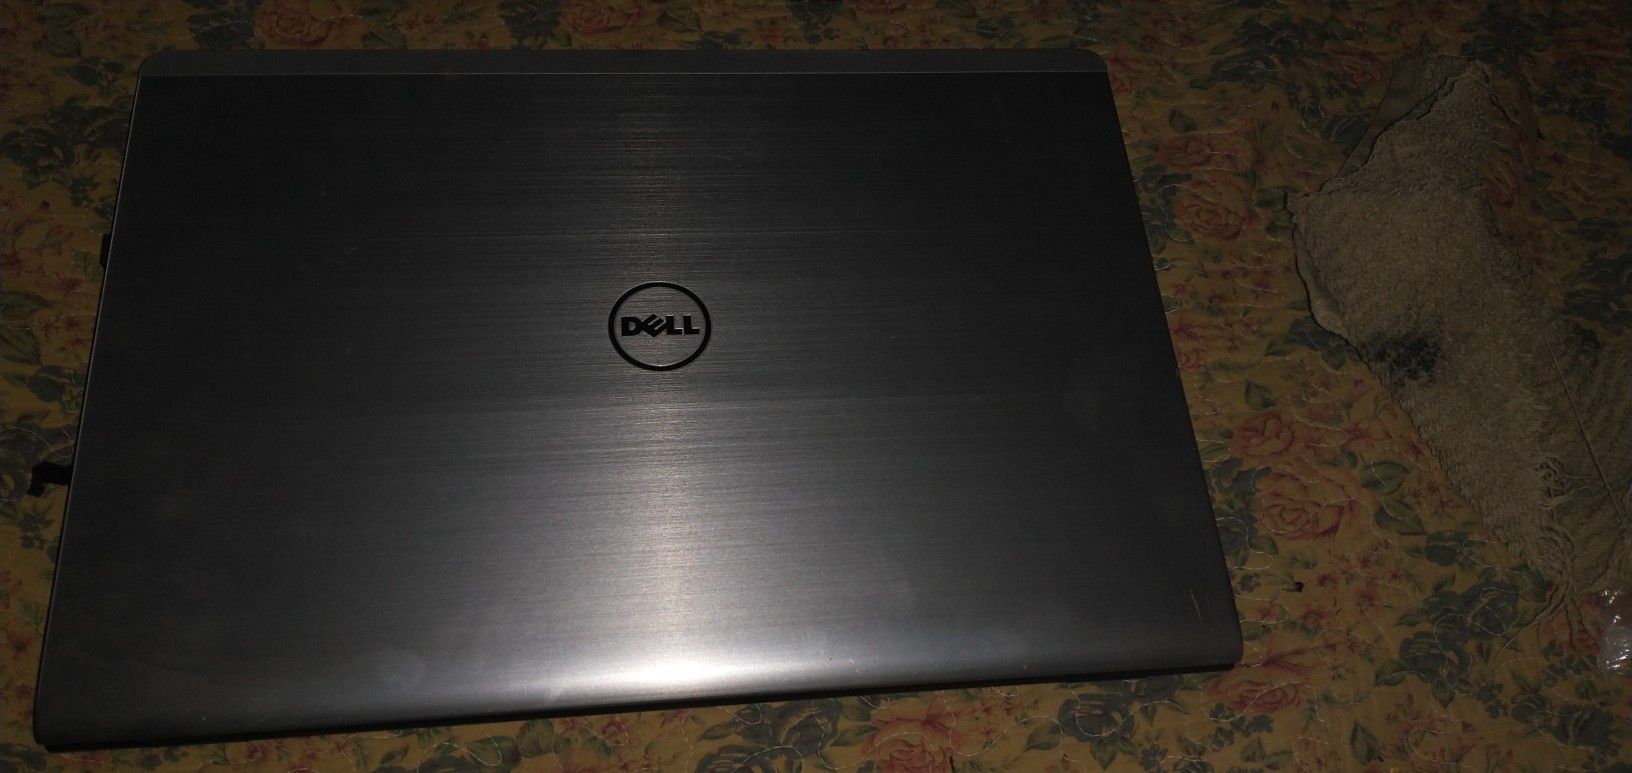 Dell laptop (2020)